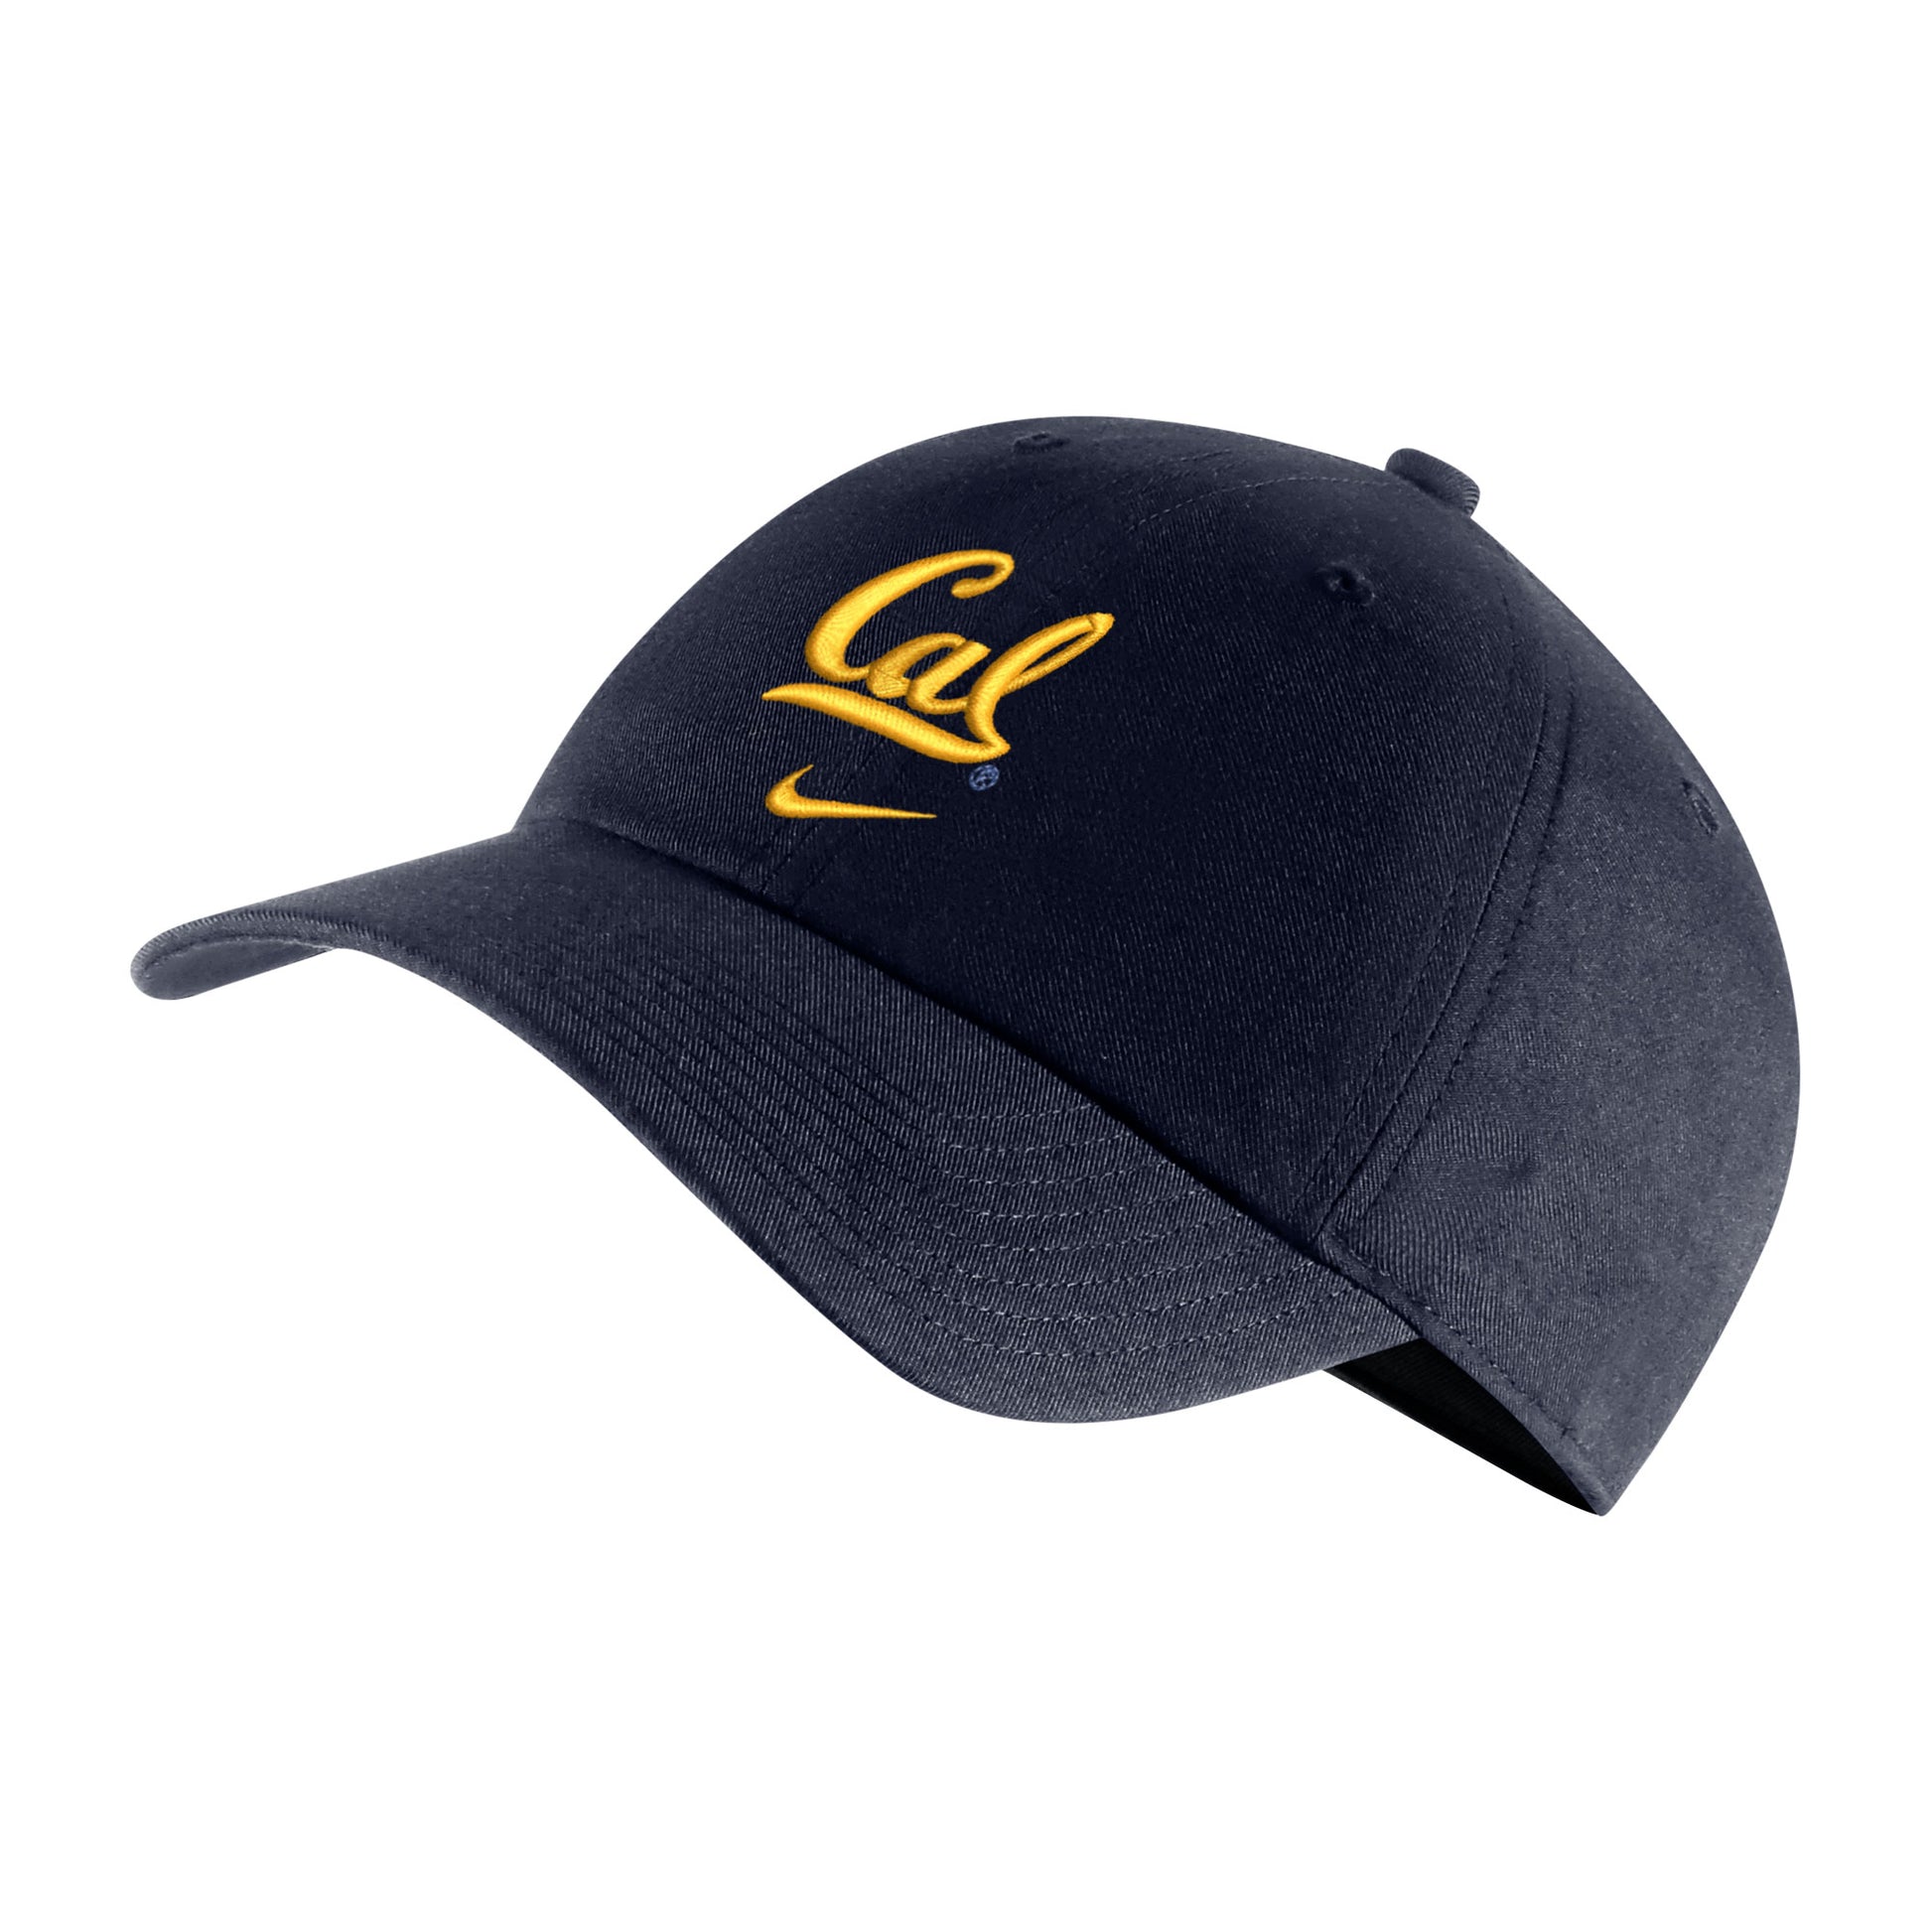 U.C. Berkeley embroidered Cal script & Nike swoosh campus hat-Navy-Shop College Wear